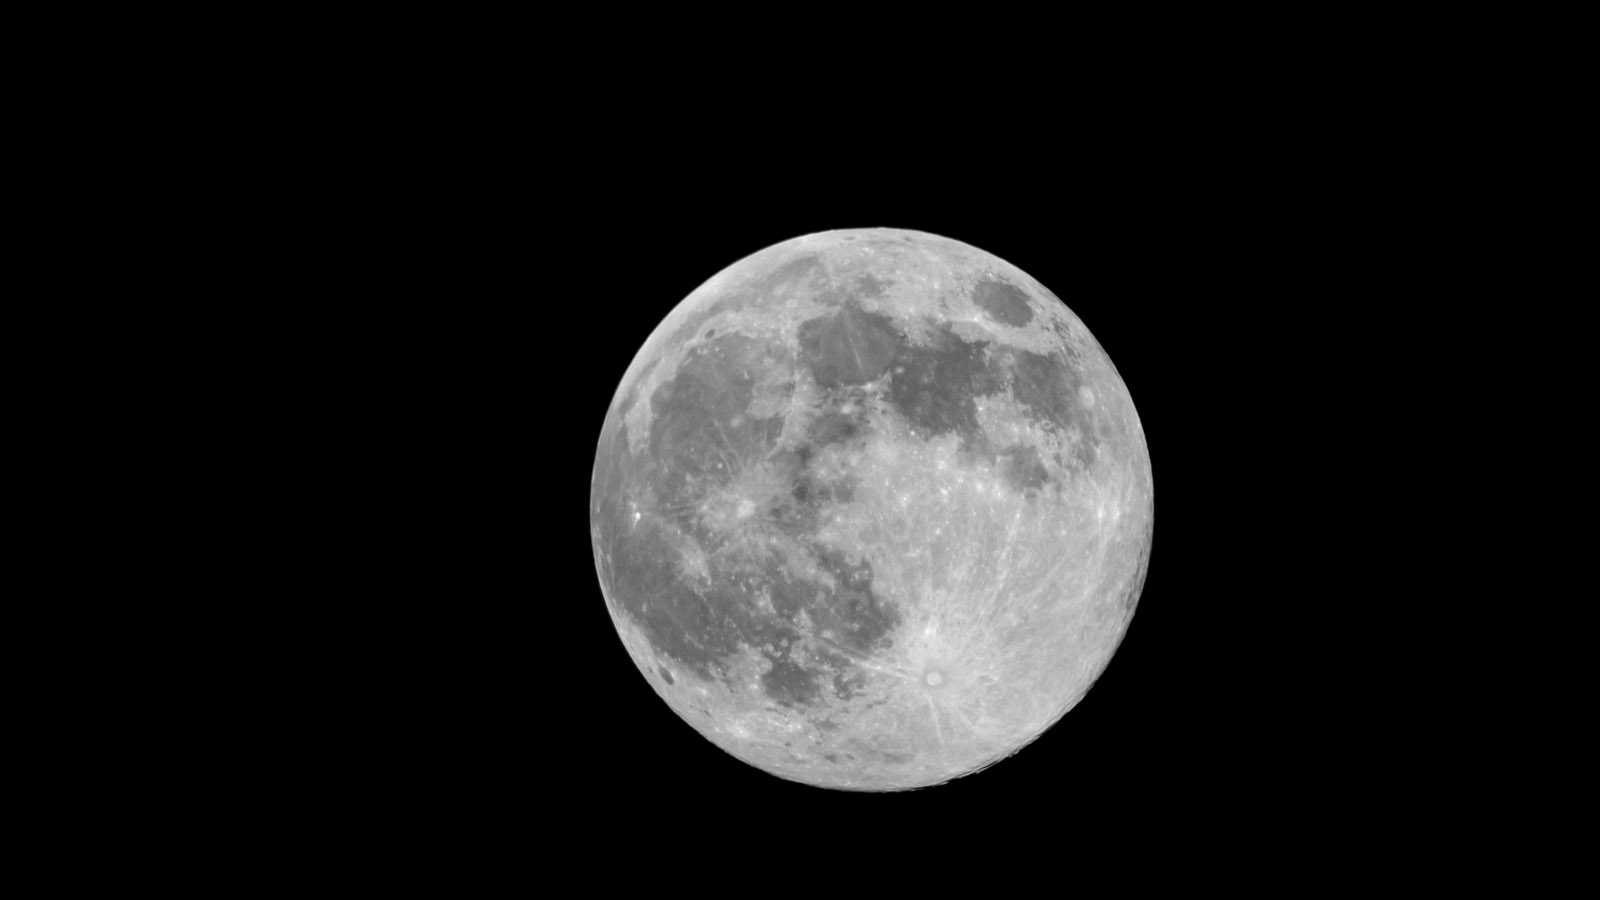 NASA Captures Photo Of 'Surfboard' Object Orbiting The Moon